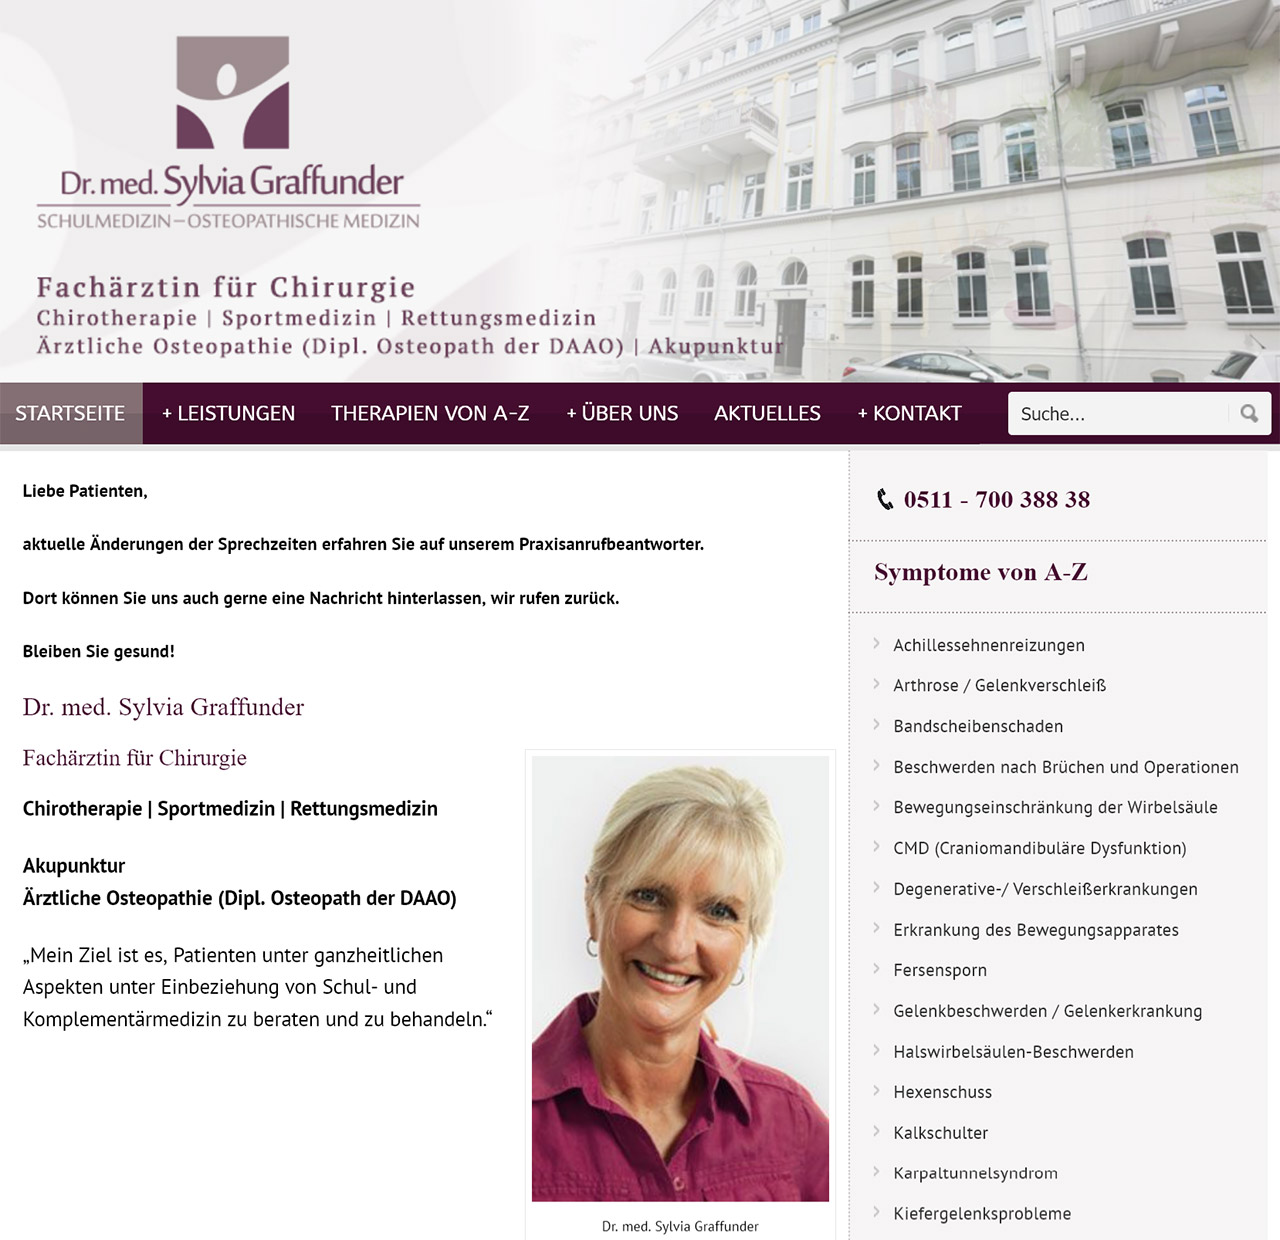 Dr. med. Sylvia Graffunder - Schulmedizin - Osteopathische Medizin